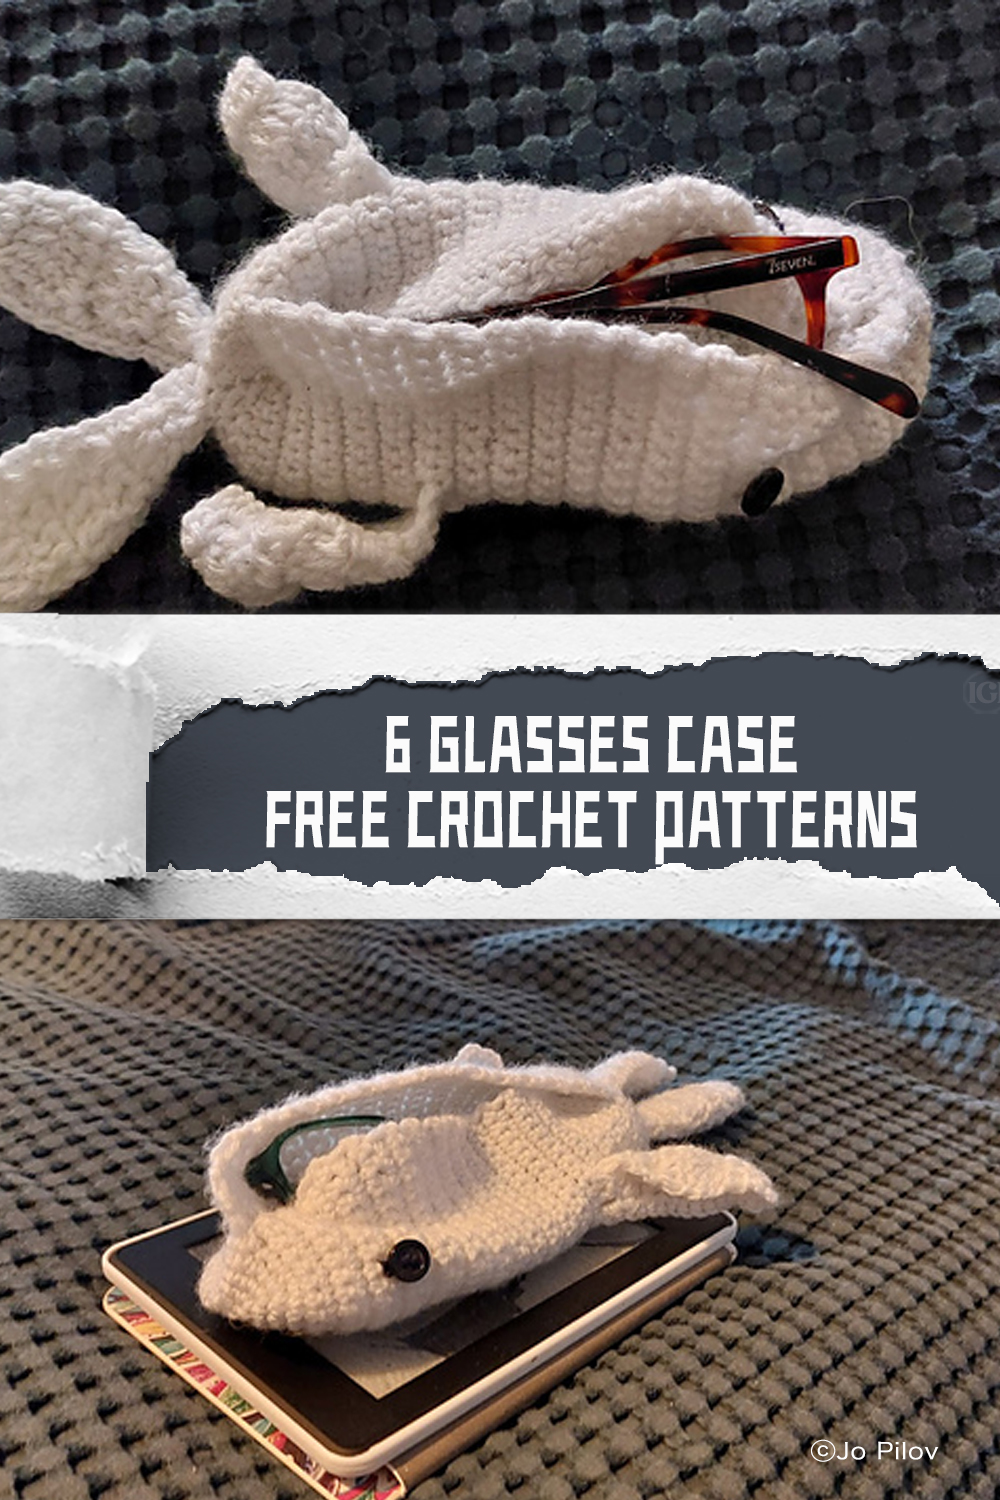 6 FREE Crochet Glasses Case Patterns